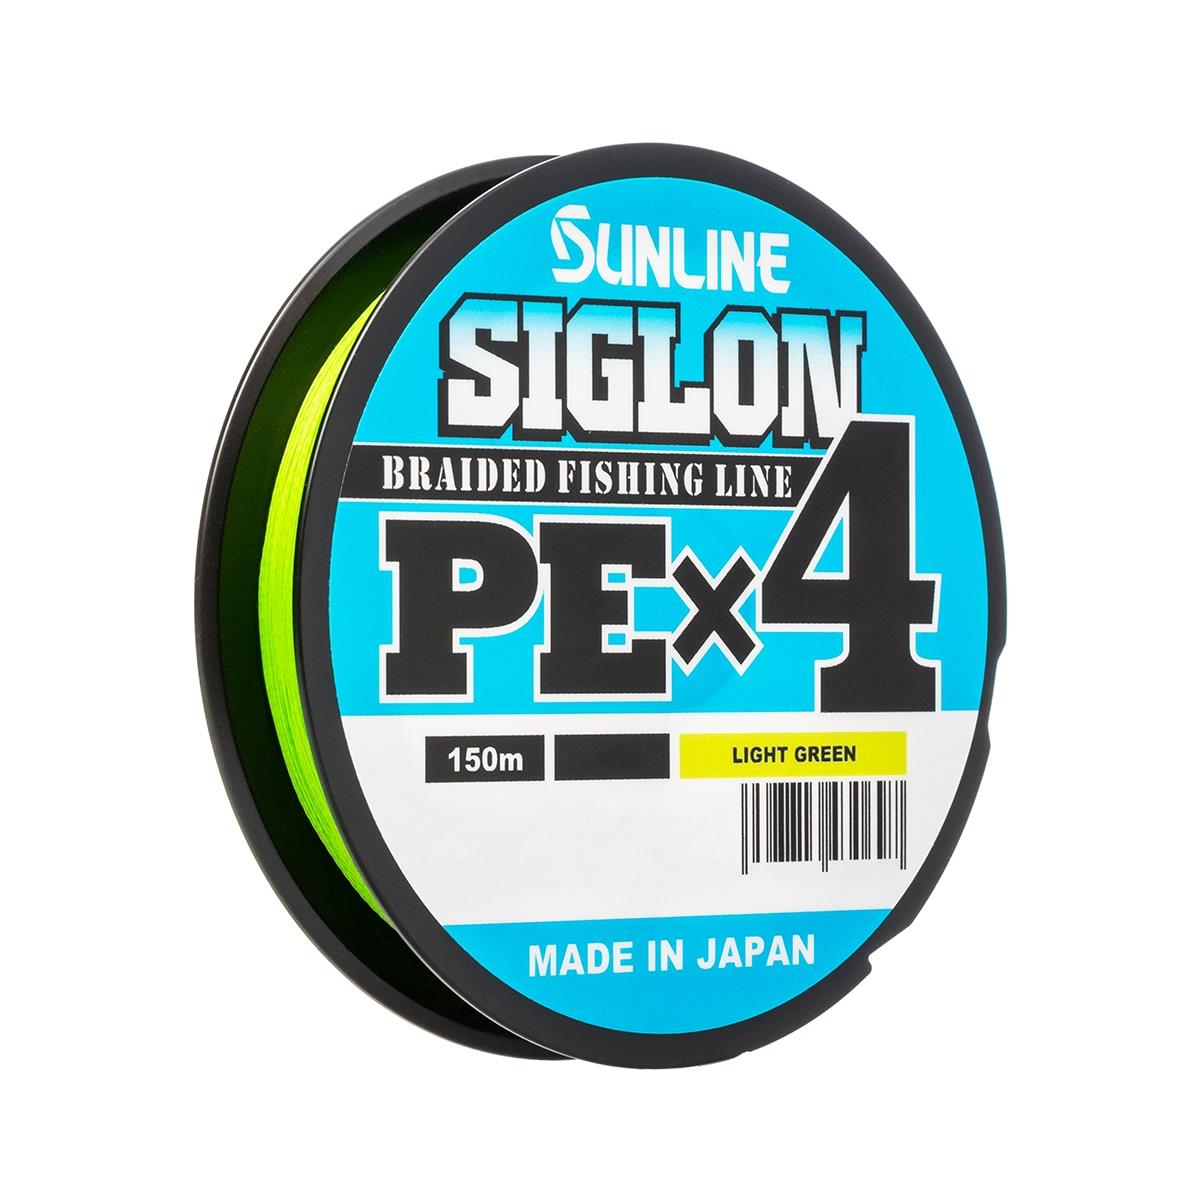 Шнур SIGLON PE×4 150 м (Light green) Sunline 255036 SIGLON PE×4 150M(light green) #1/16LB - фото 1